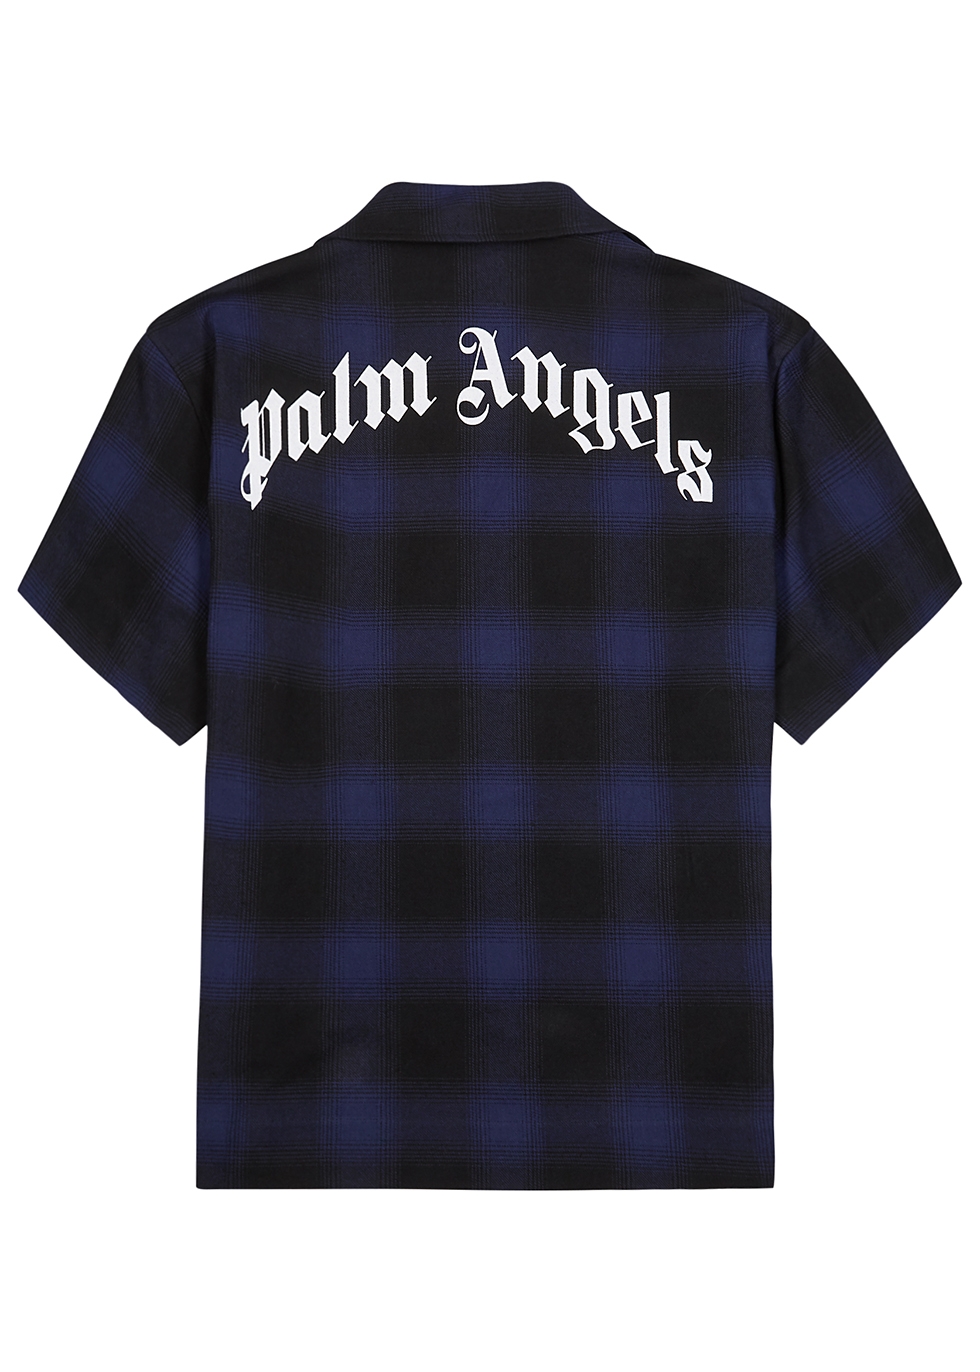 blue palm angels shirt